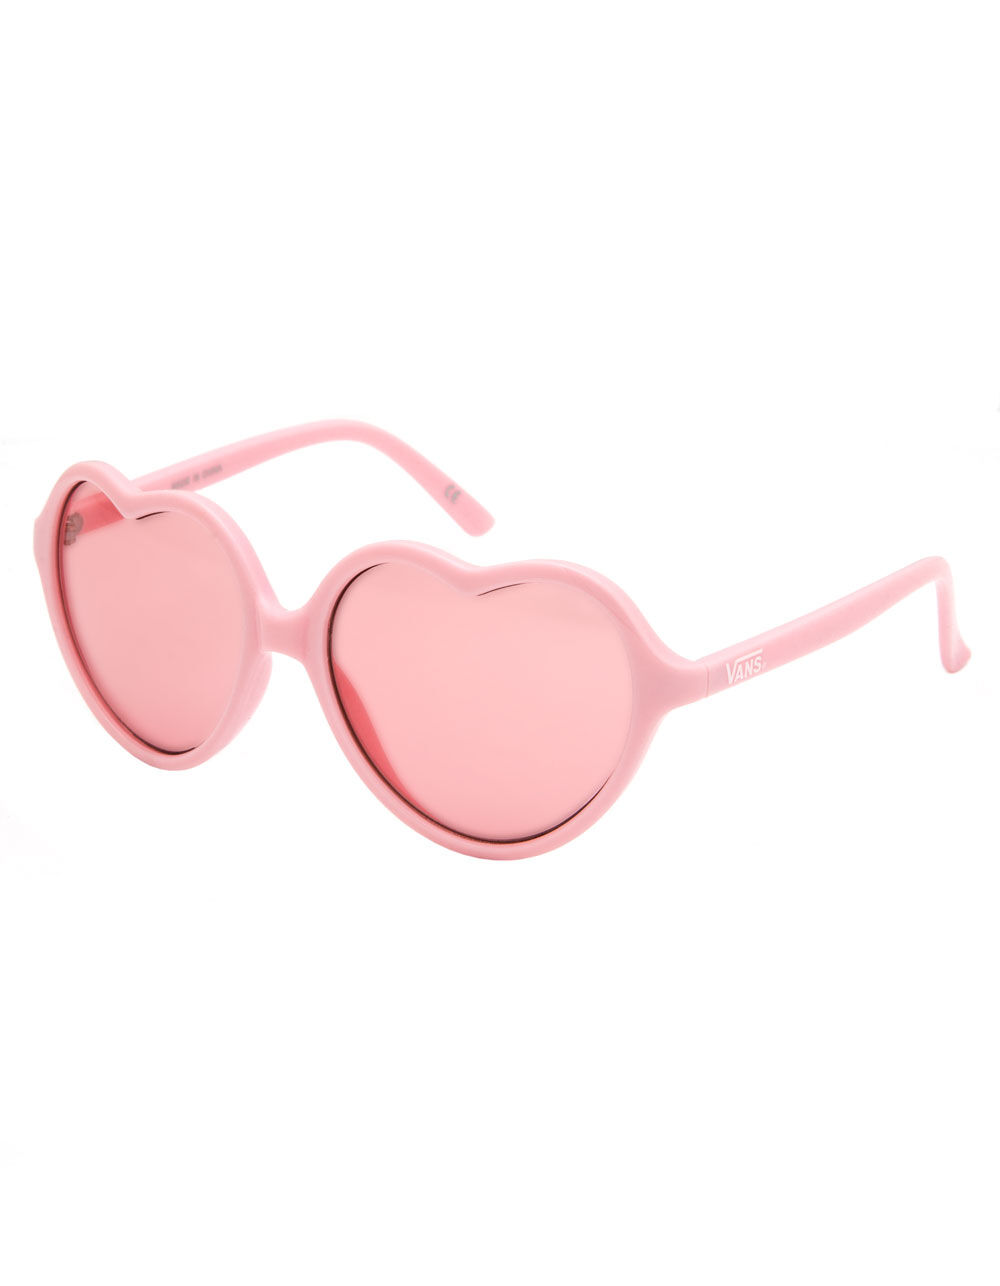 VANS Heartthrob Pink Sunglasses image number 0